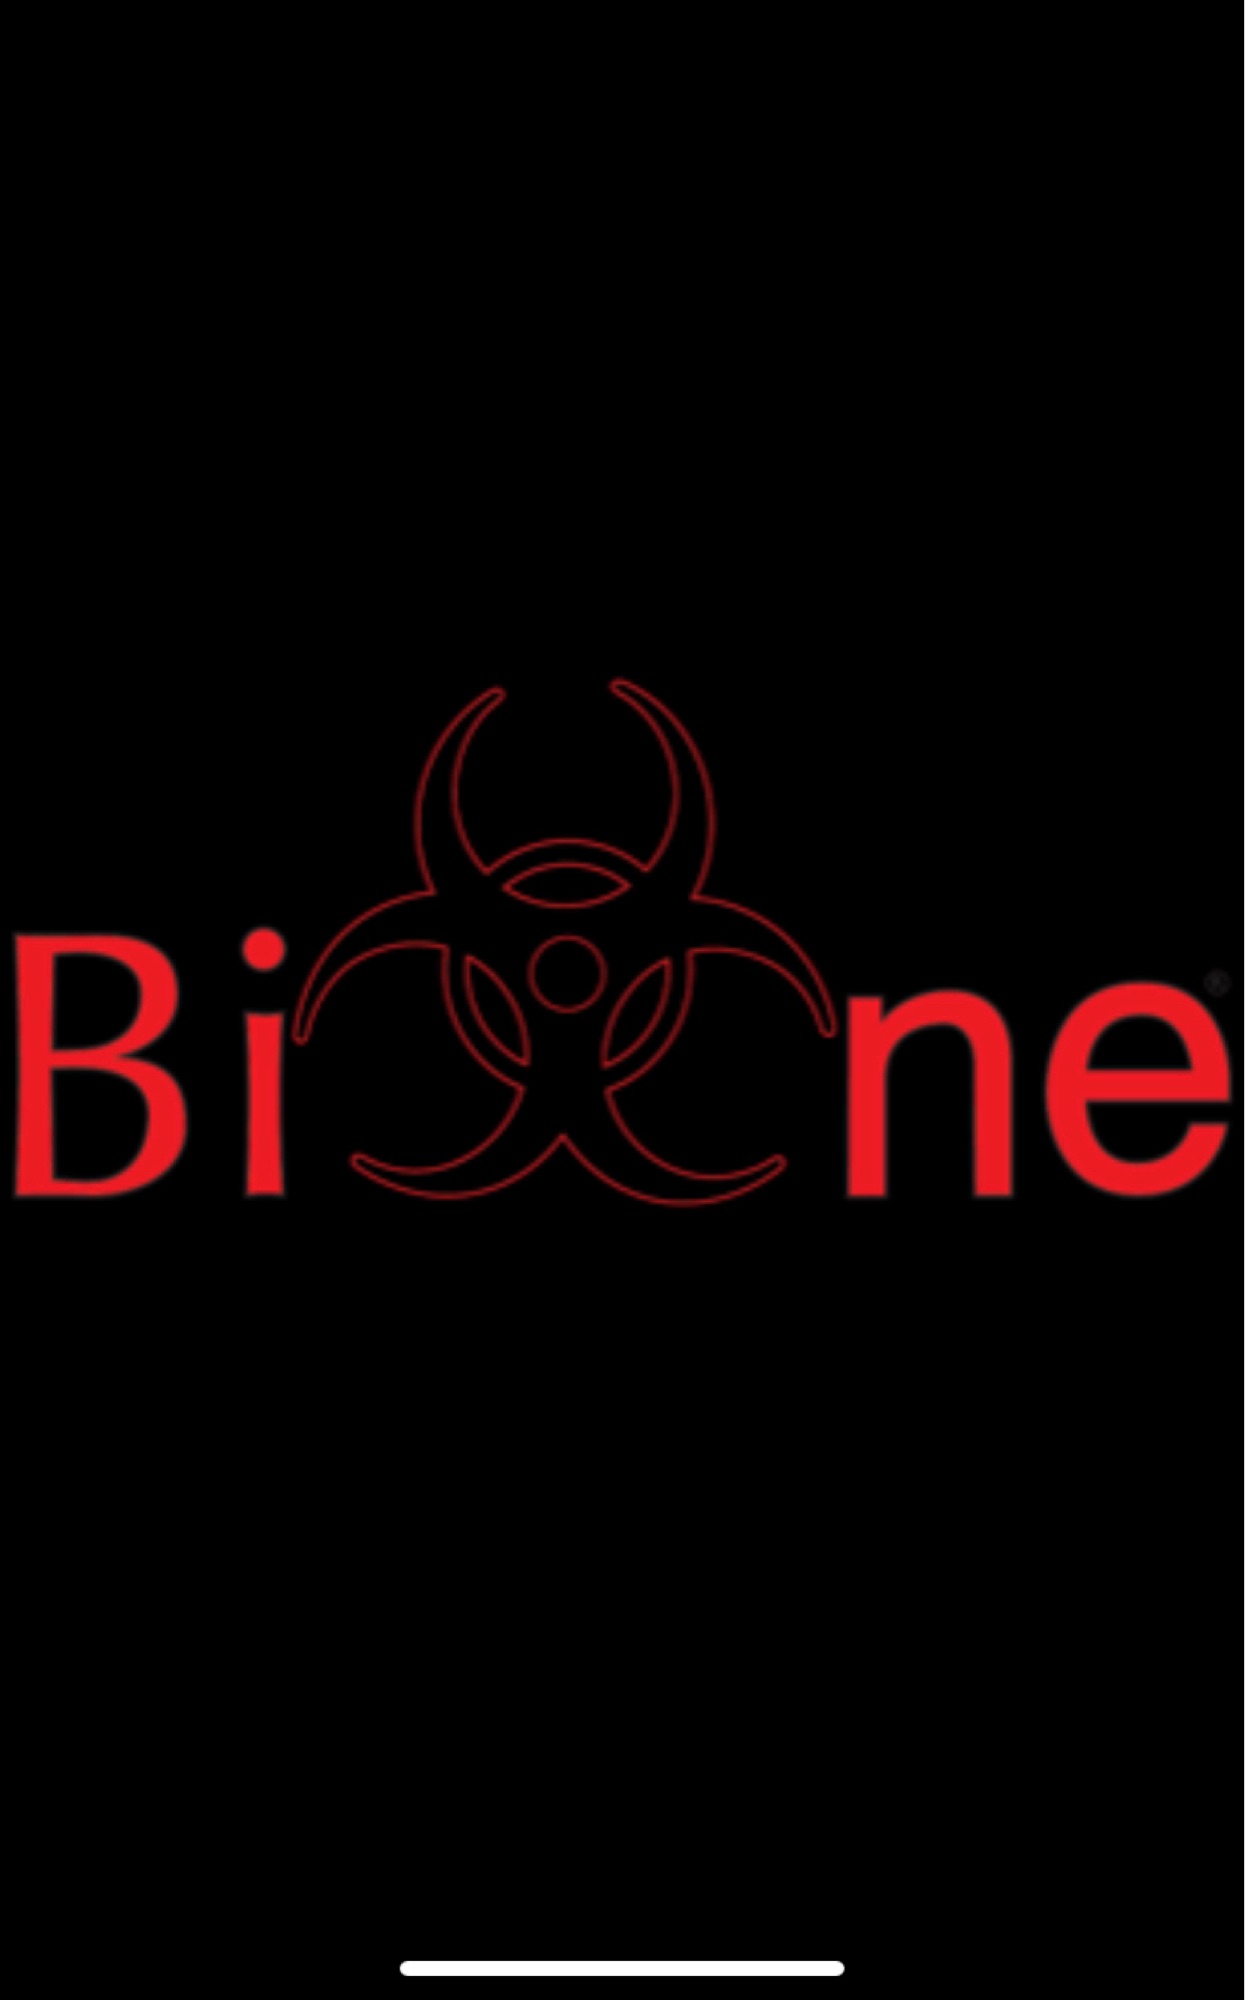 Bio-One Albuquerque Logo